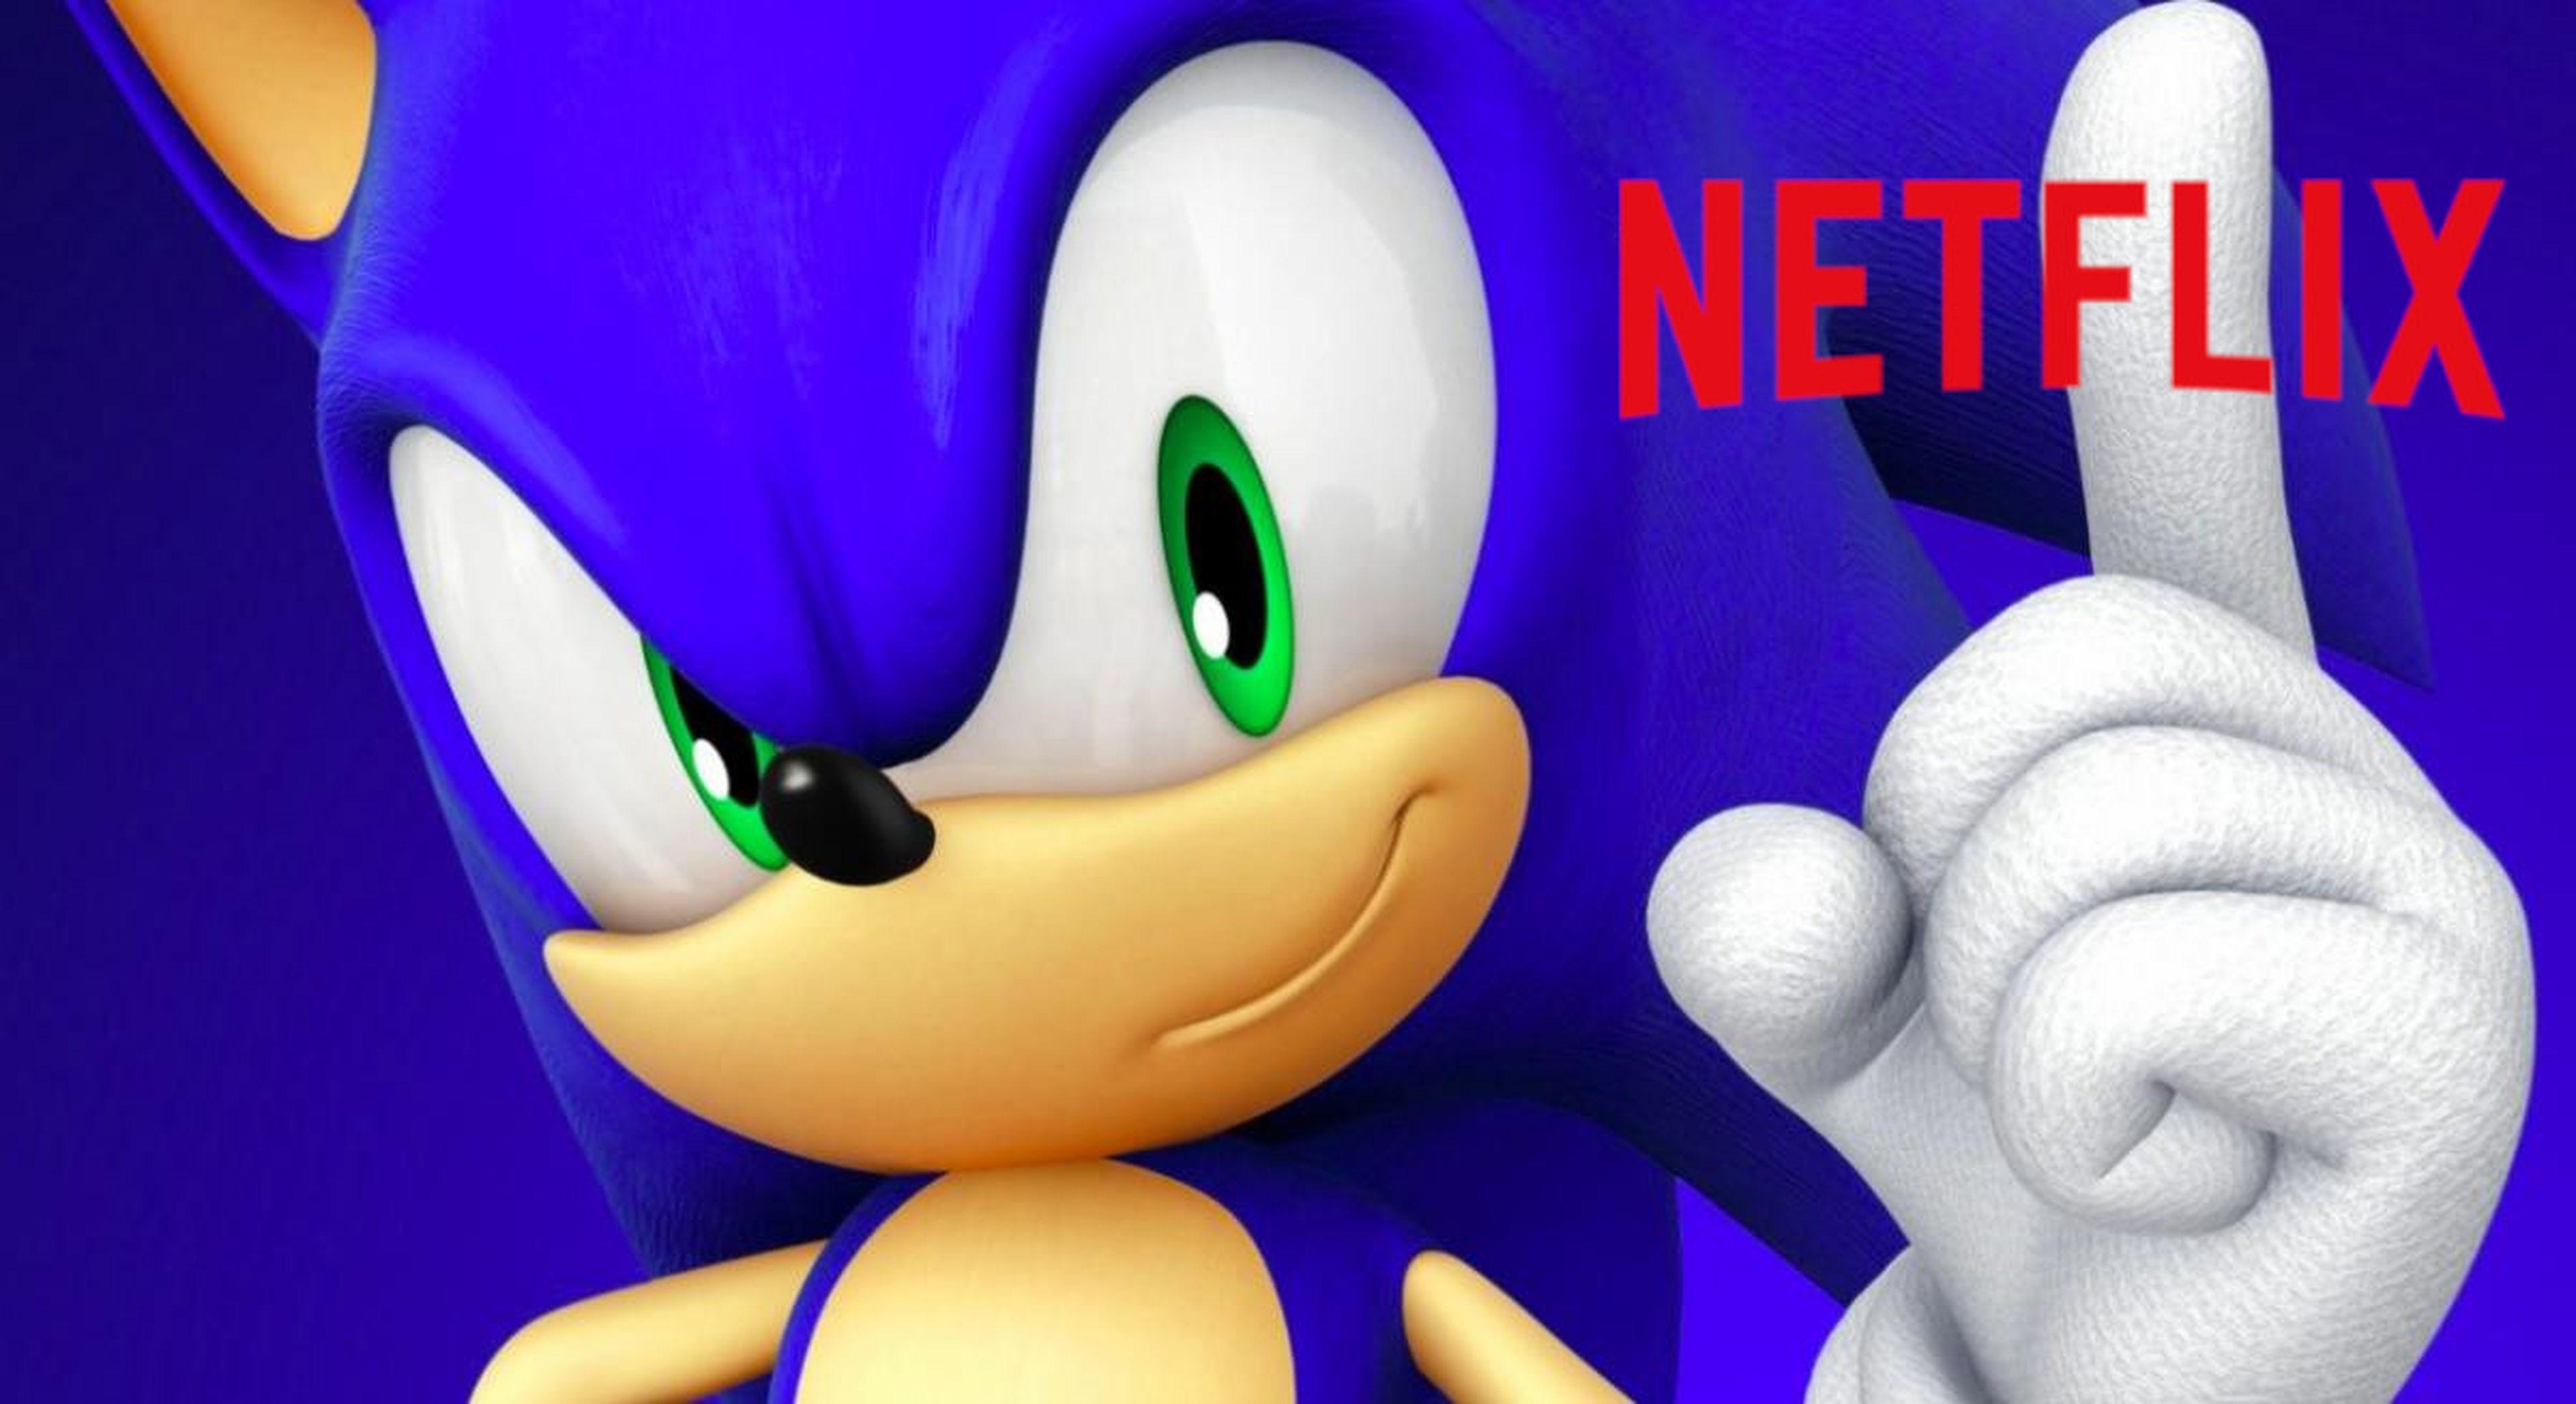 Sonic Netflix